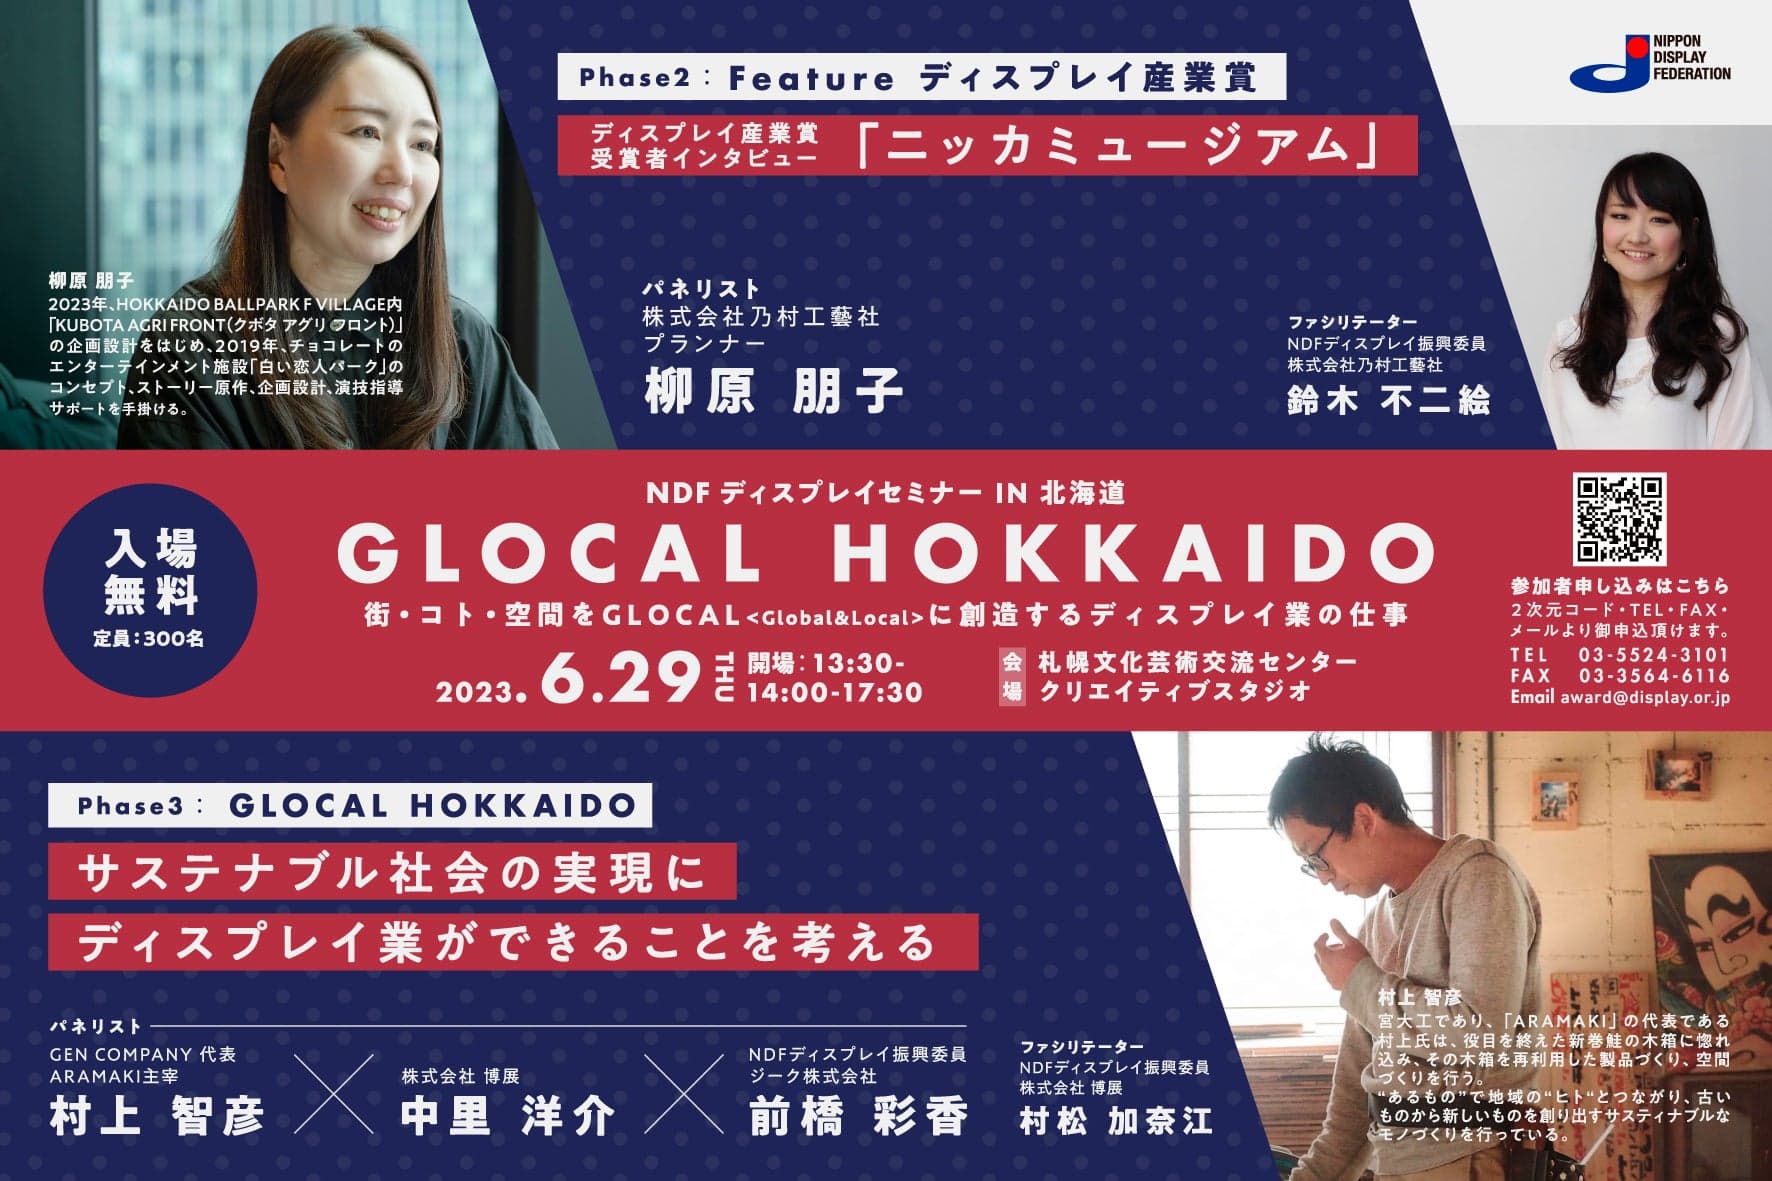 NDFディスプレイセミナー IN 北海道「GLOCAL HOKKAIDO」にプランナー柳原 朋子、IVD アートディレクター 鈴木 不二絵が登壇します